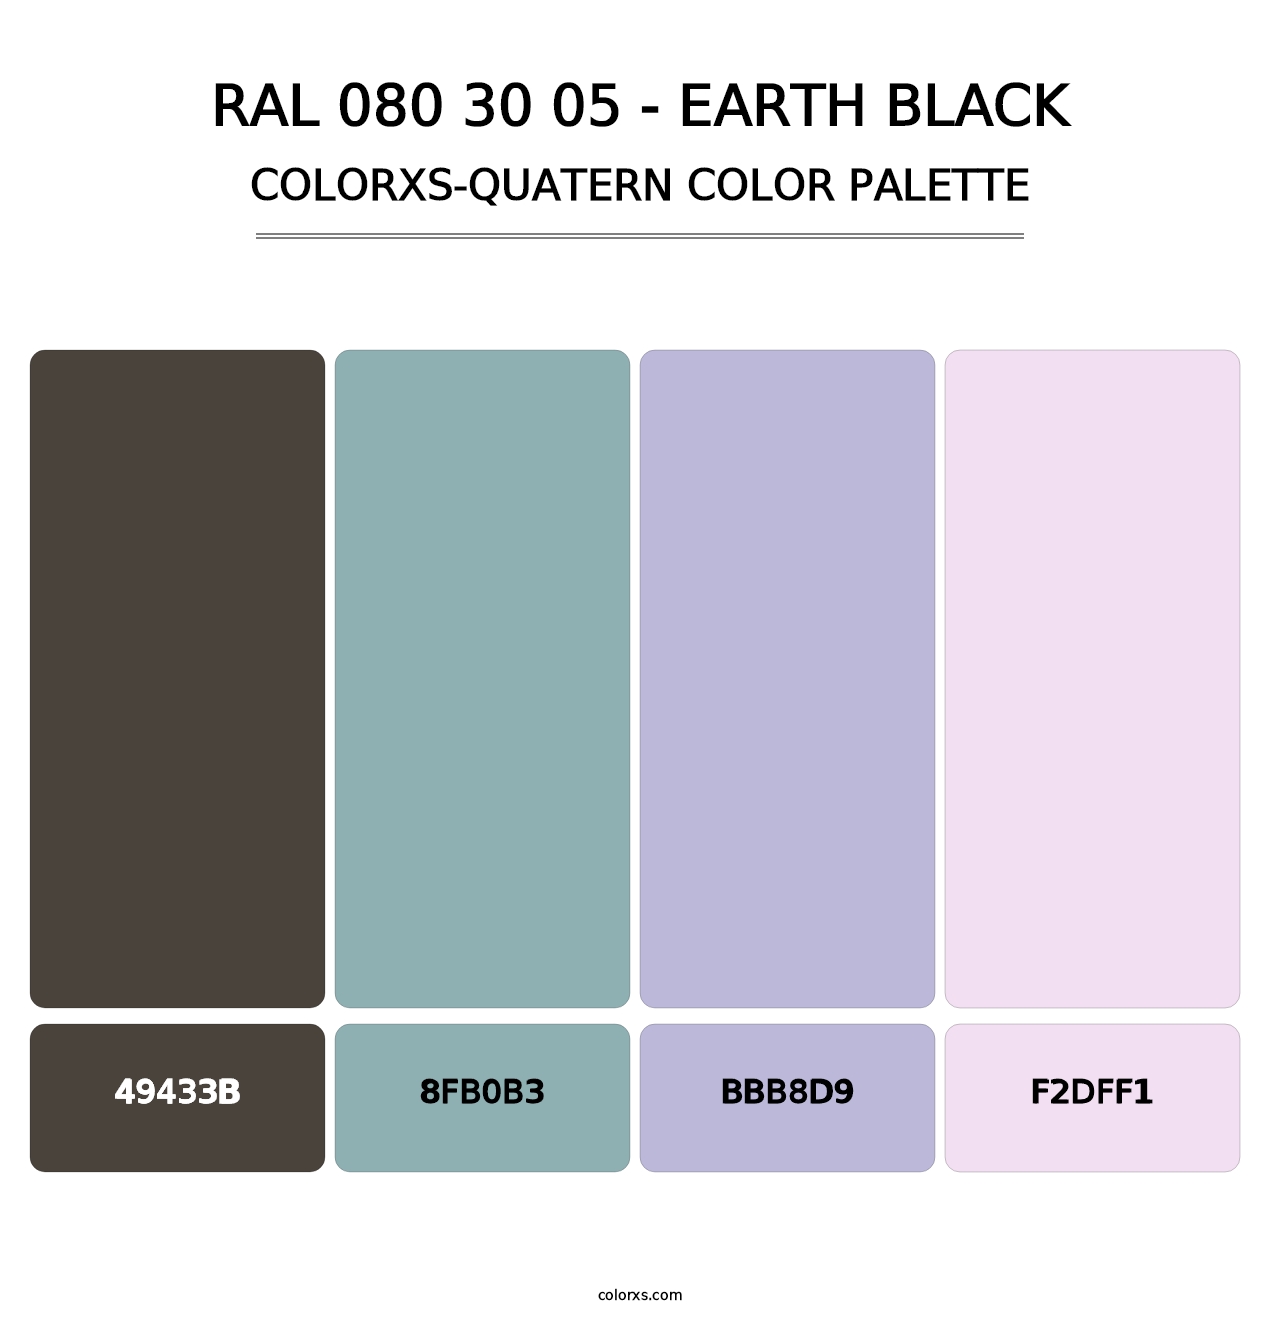 RAL 080 30 05 - Earth Black - Colorxs Quatern Palette